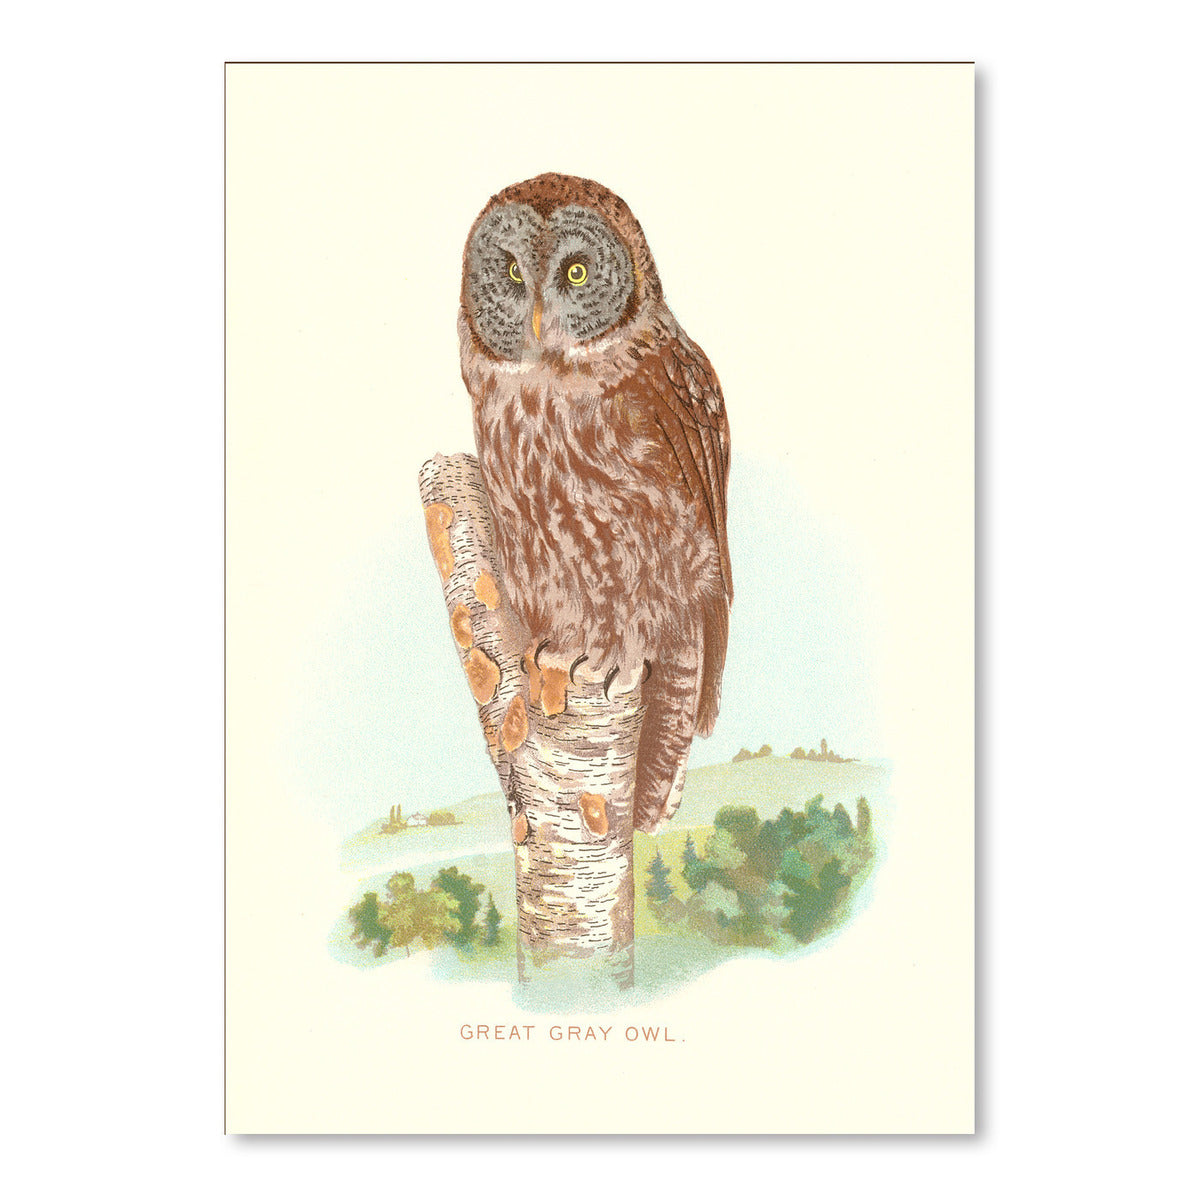 Great Gray Owl by Found Image Press Art Print - Art Print - Americanflat